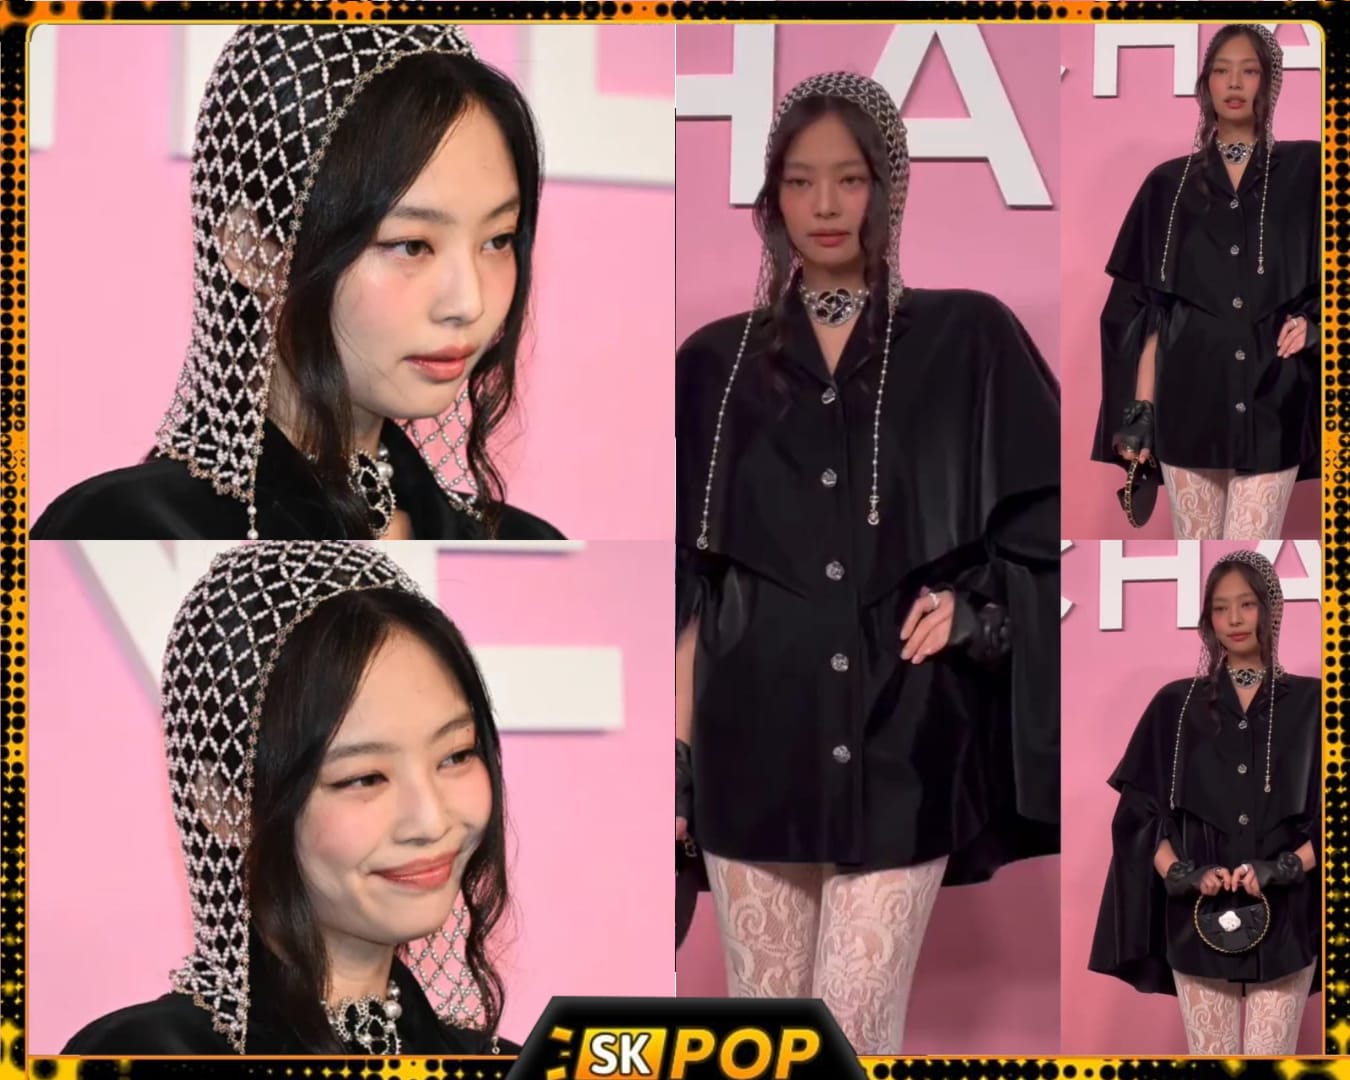 SK POP on X: 📸✨#Blackpink's #JENNIE looks stunning as she